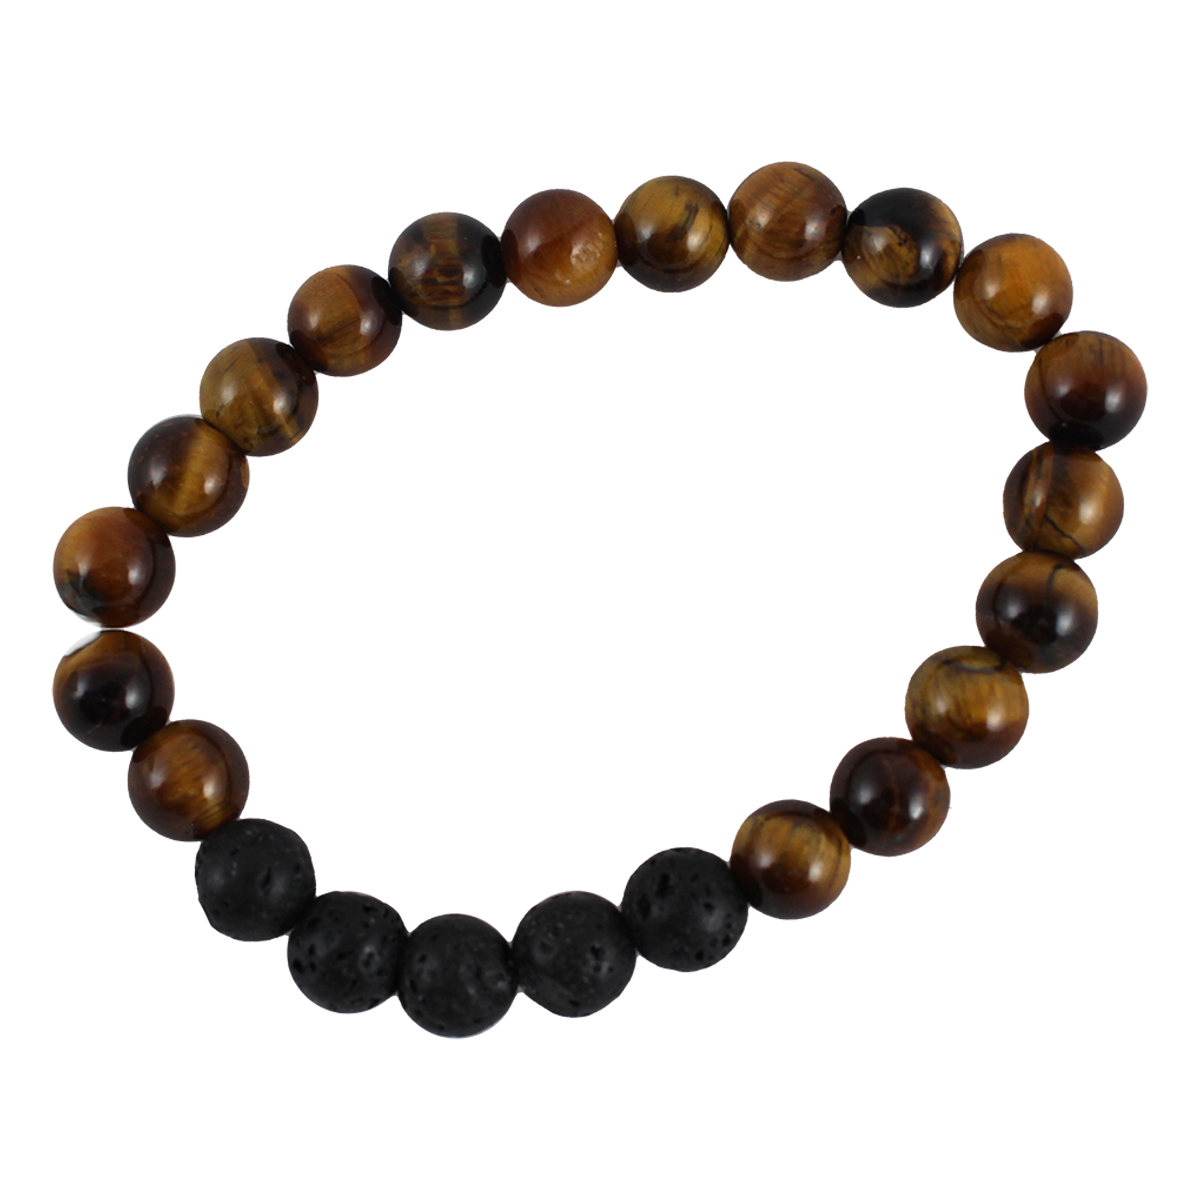 Tiger Eye bracelet with lava stone beads